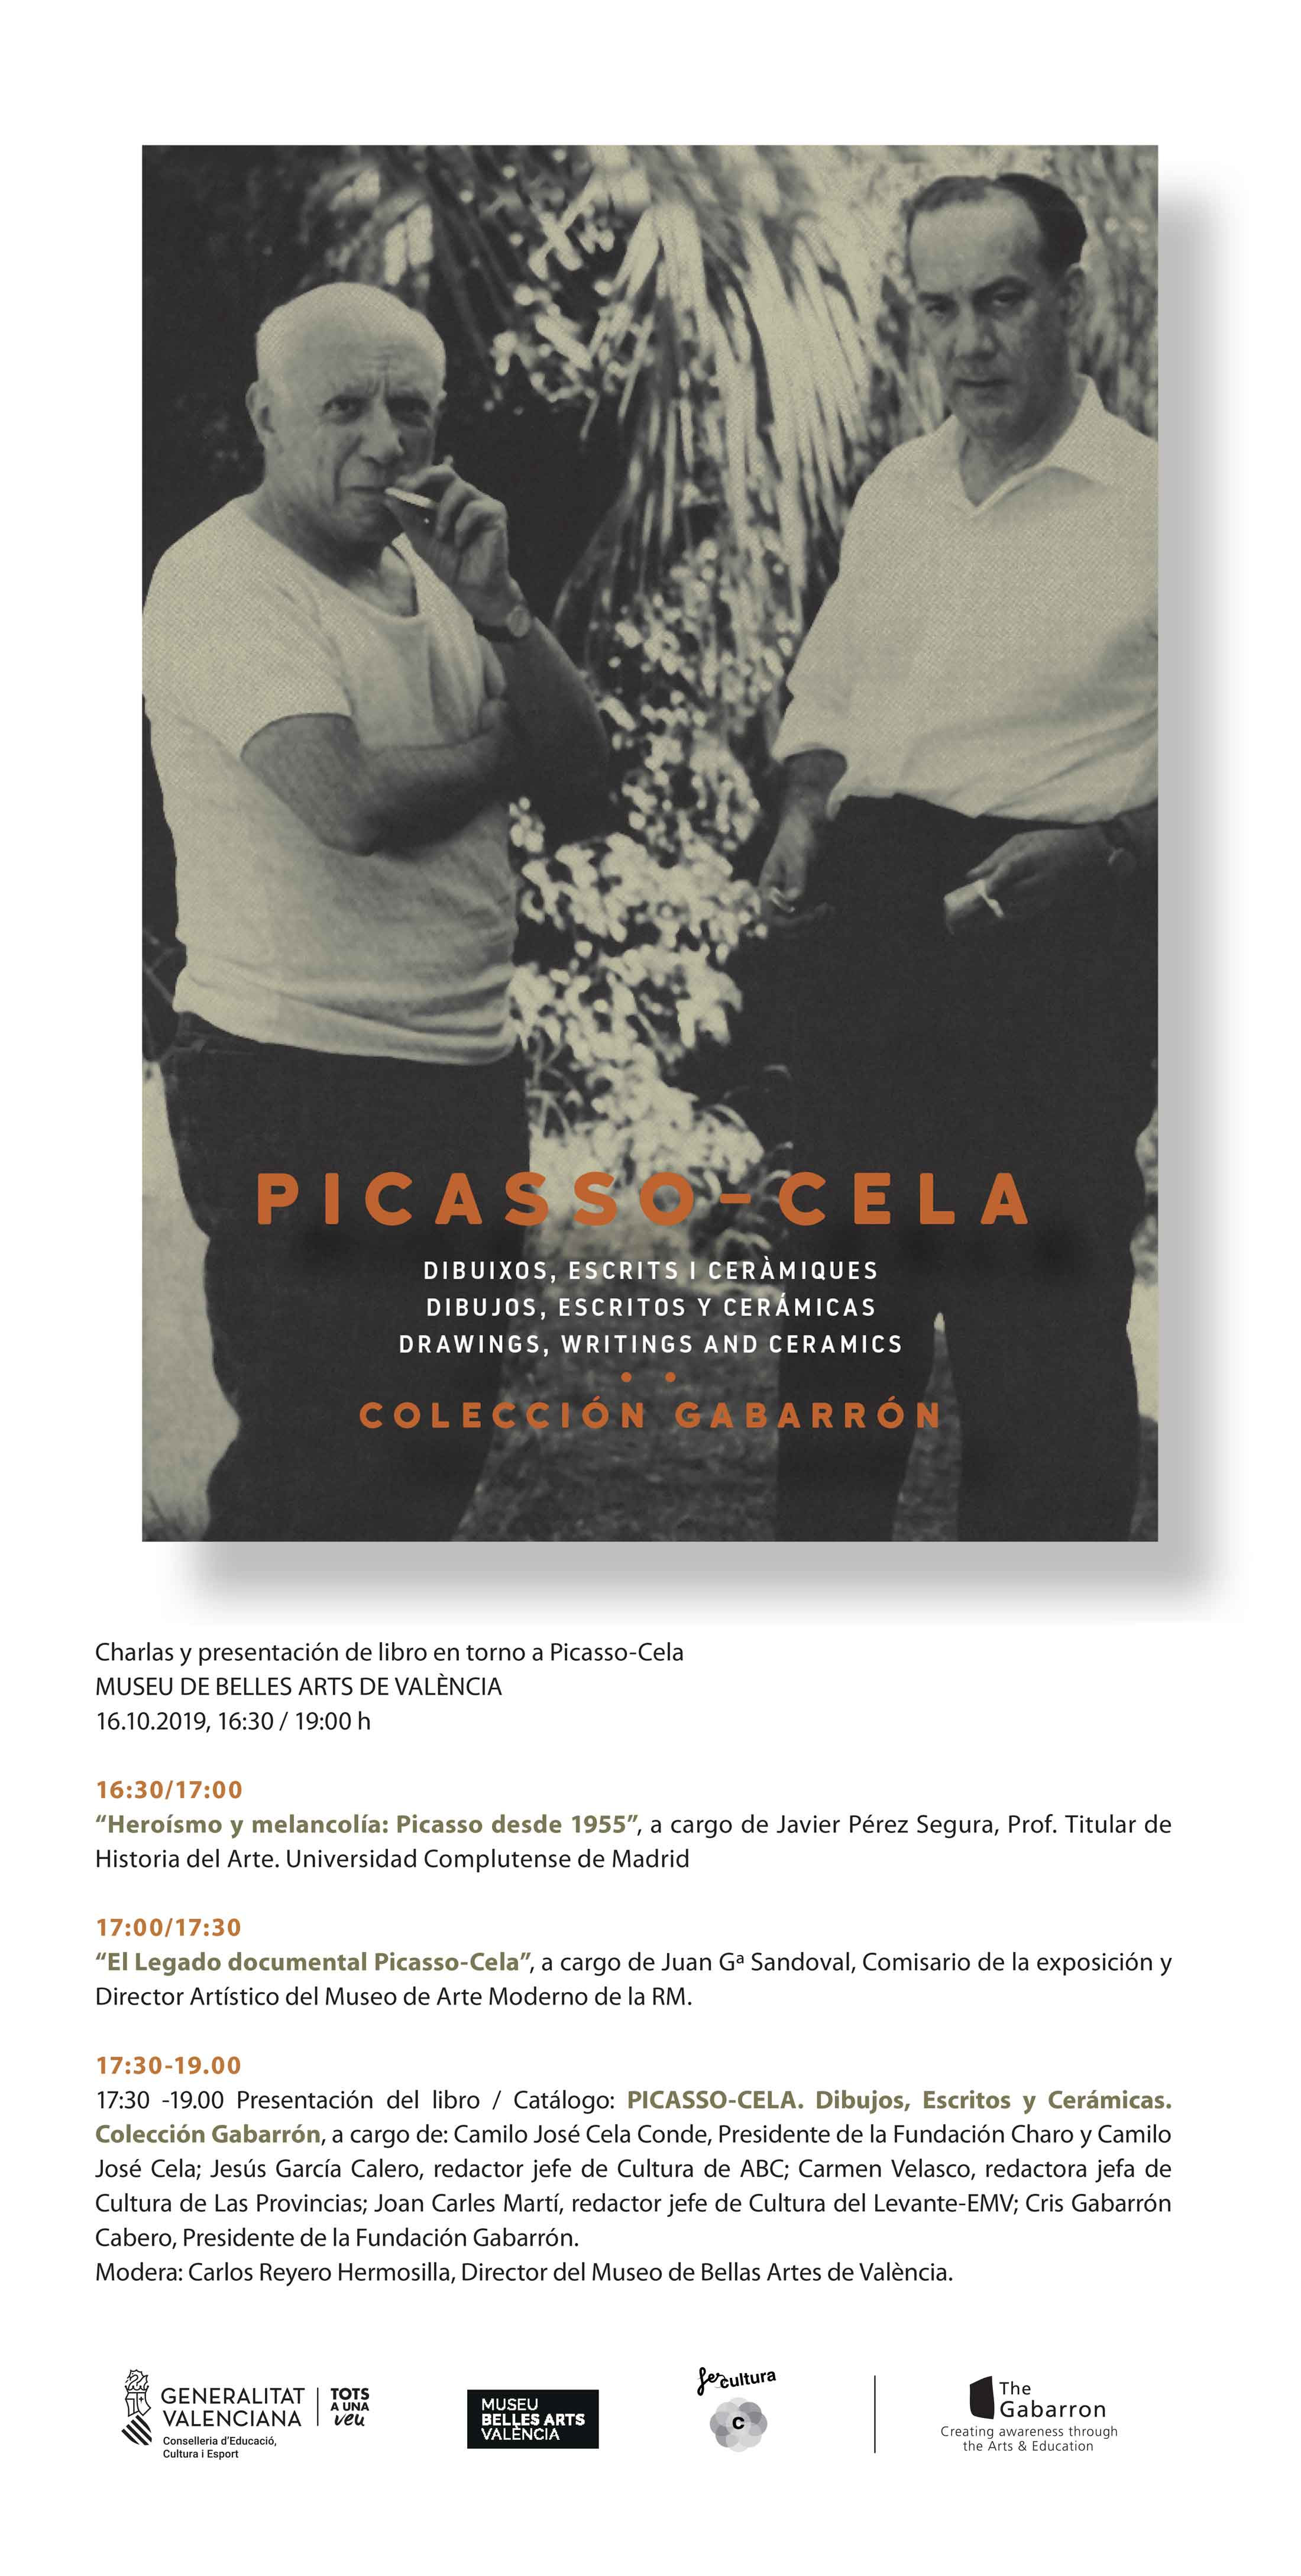 Jornadas Picasso-Cela & Presentación del libro Catálogo